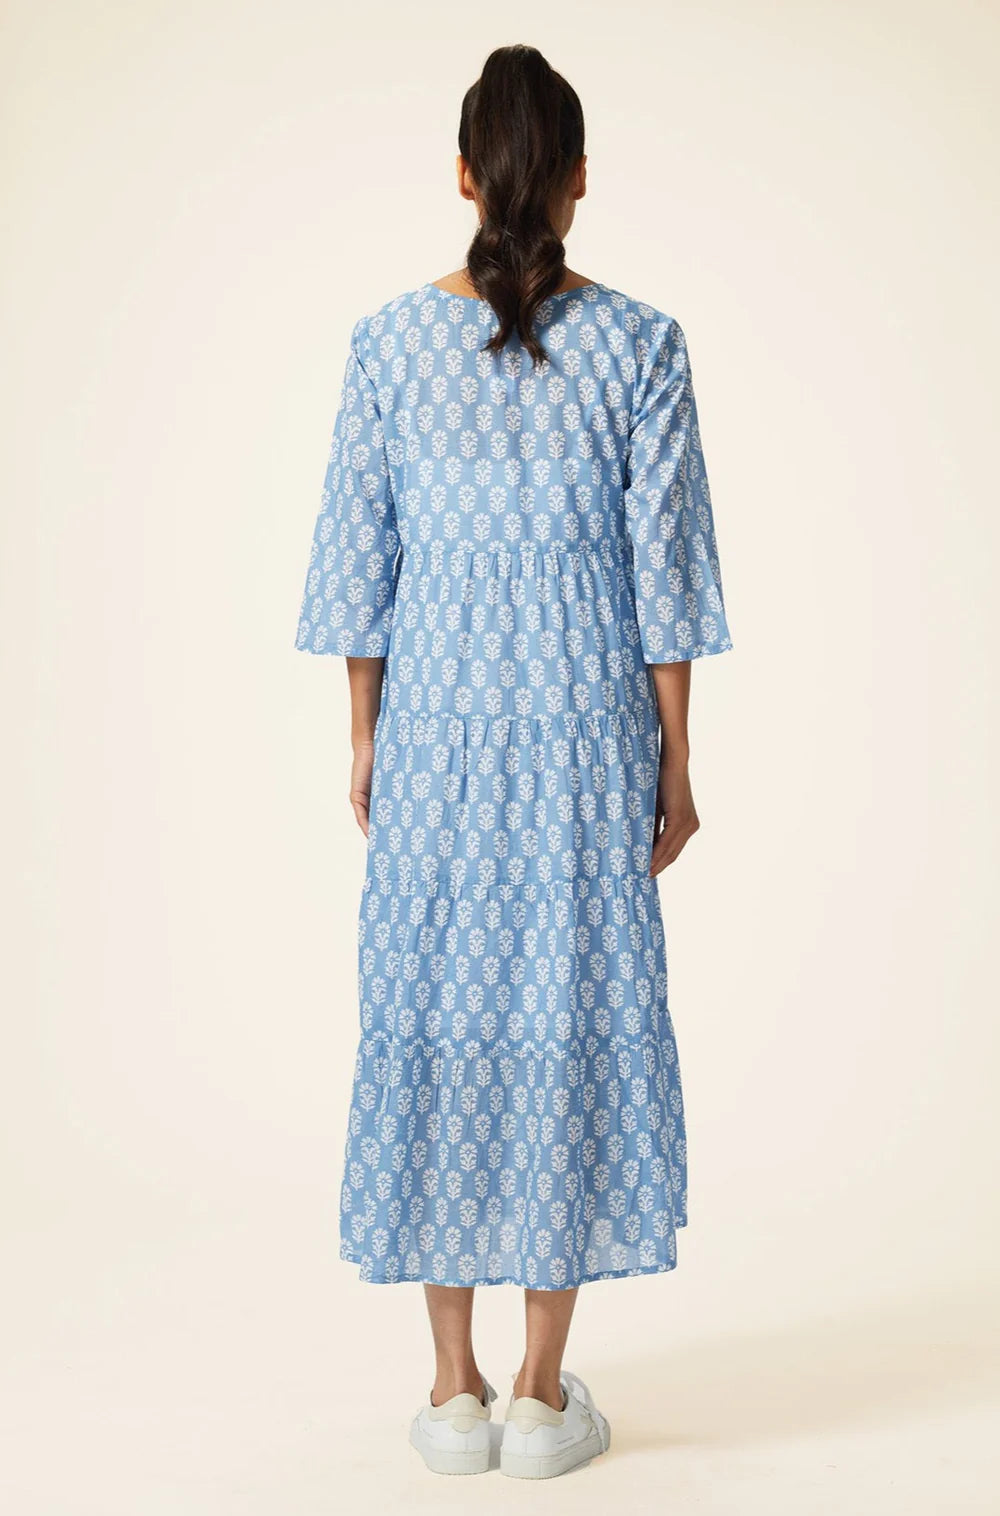 Emma Organic Cotton Midi Dress by Aspiga Emma Midi Cotton Dress Aspiga Small Geranium Blue/White 